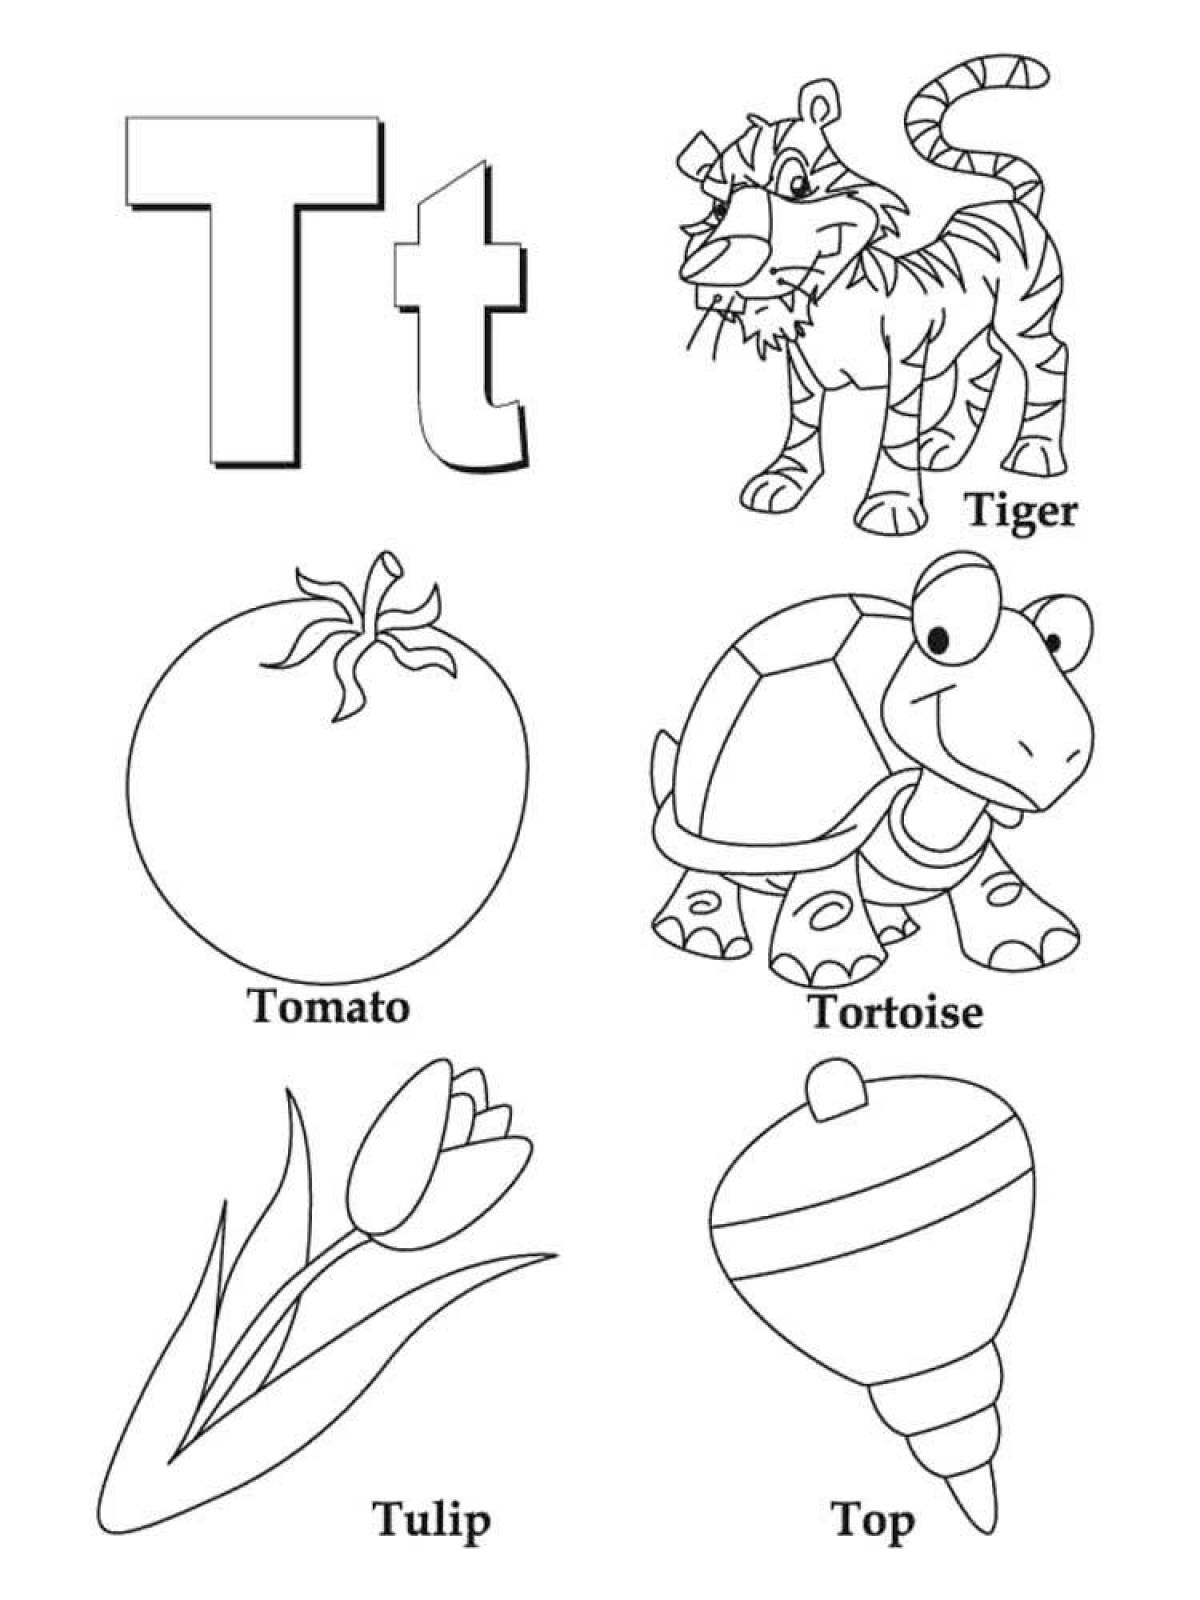 English alphabet for children grade 2 #8